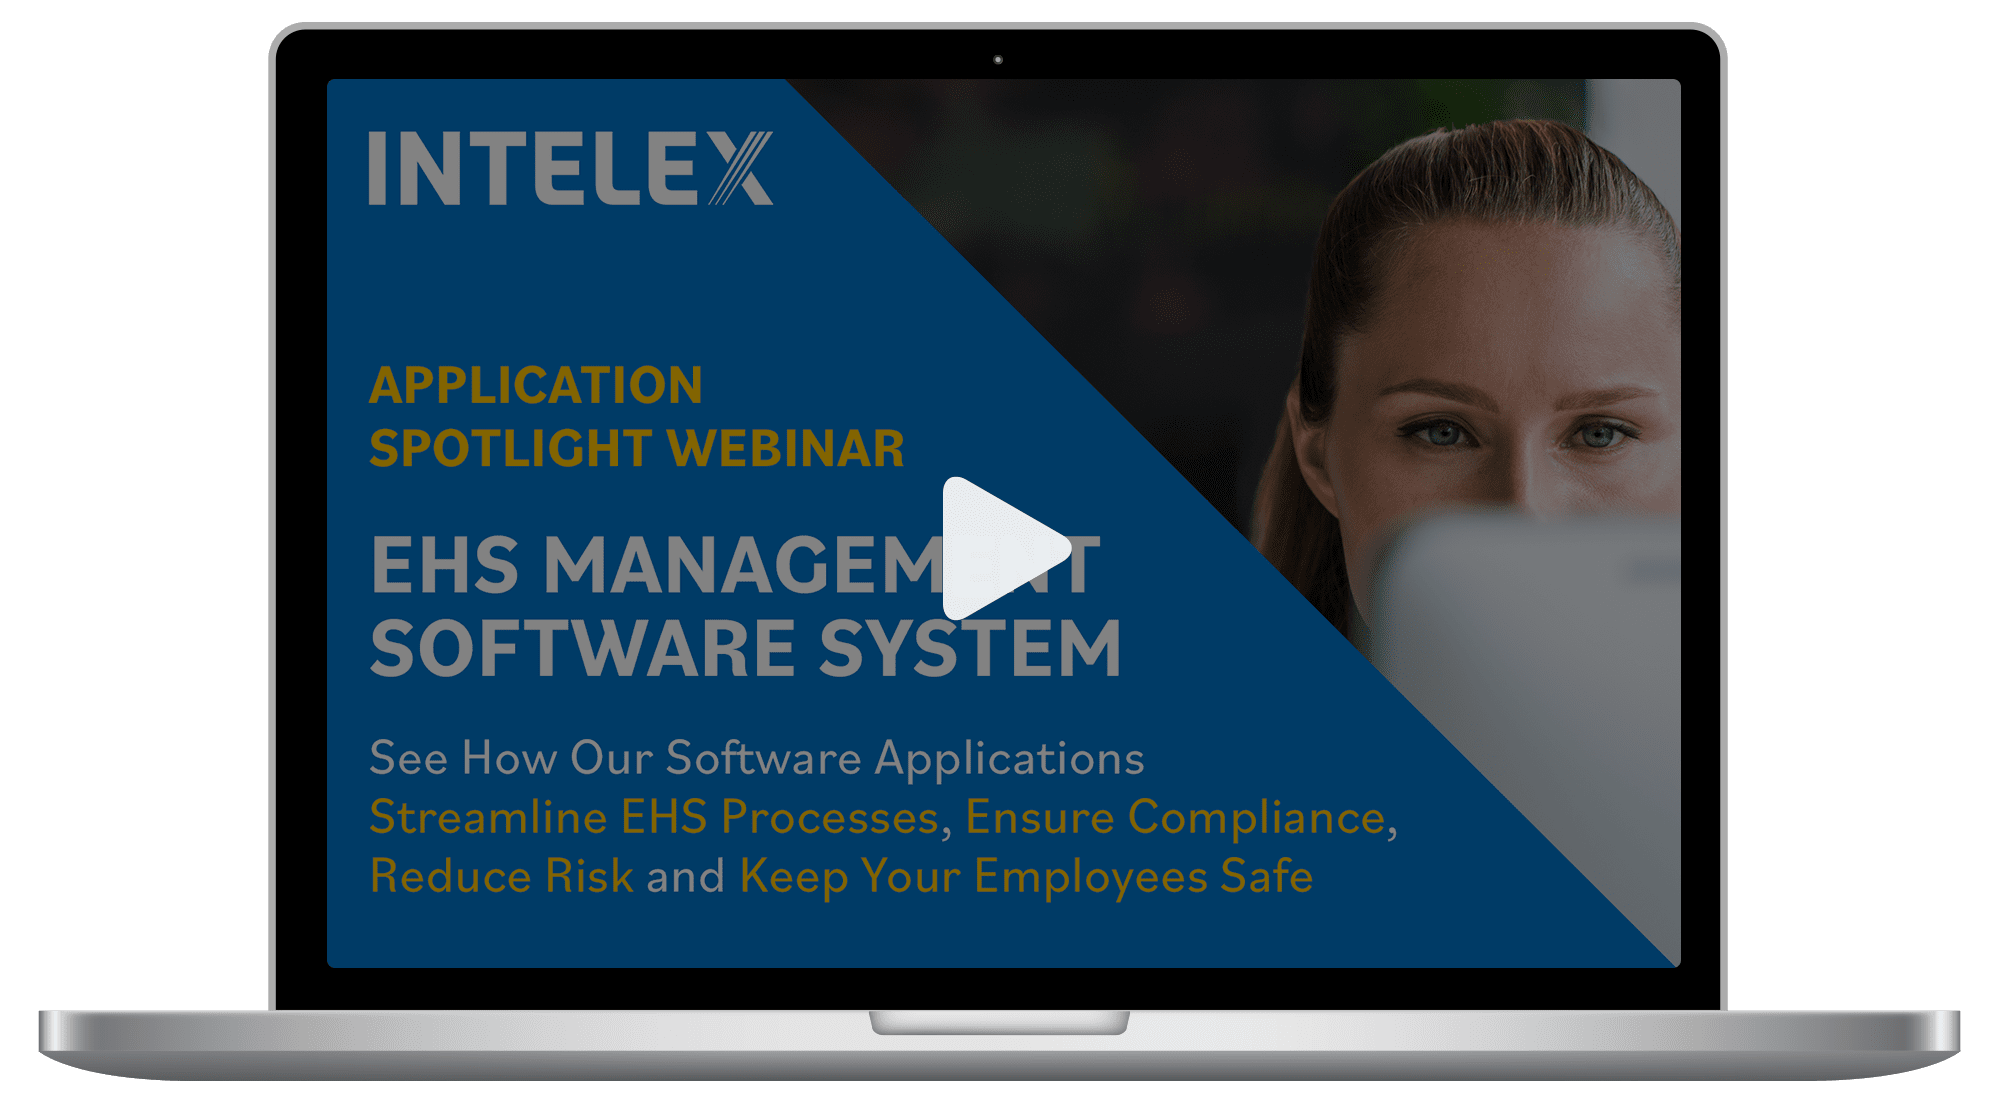 EHS Software Management Demo - Intelex